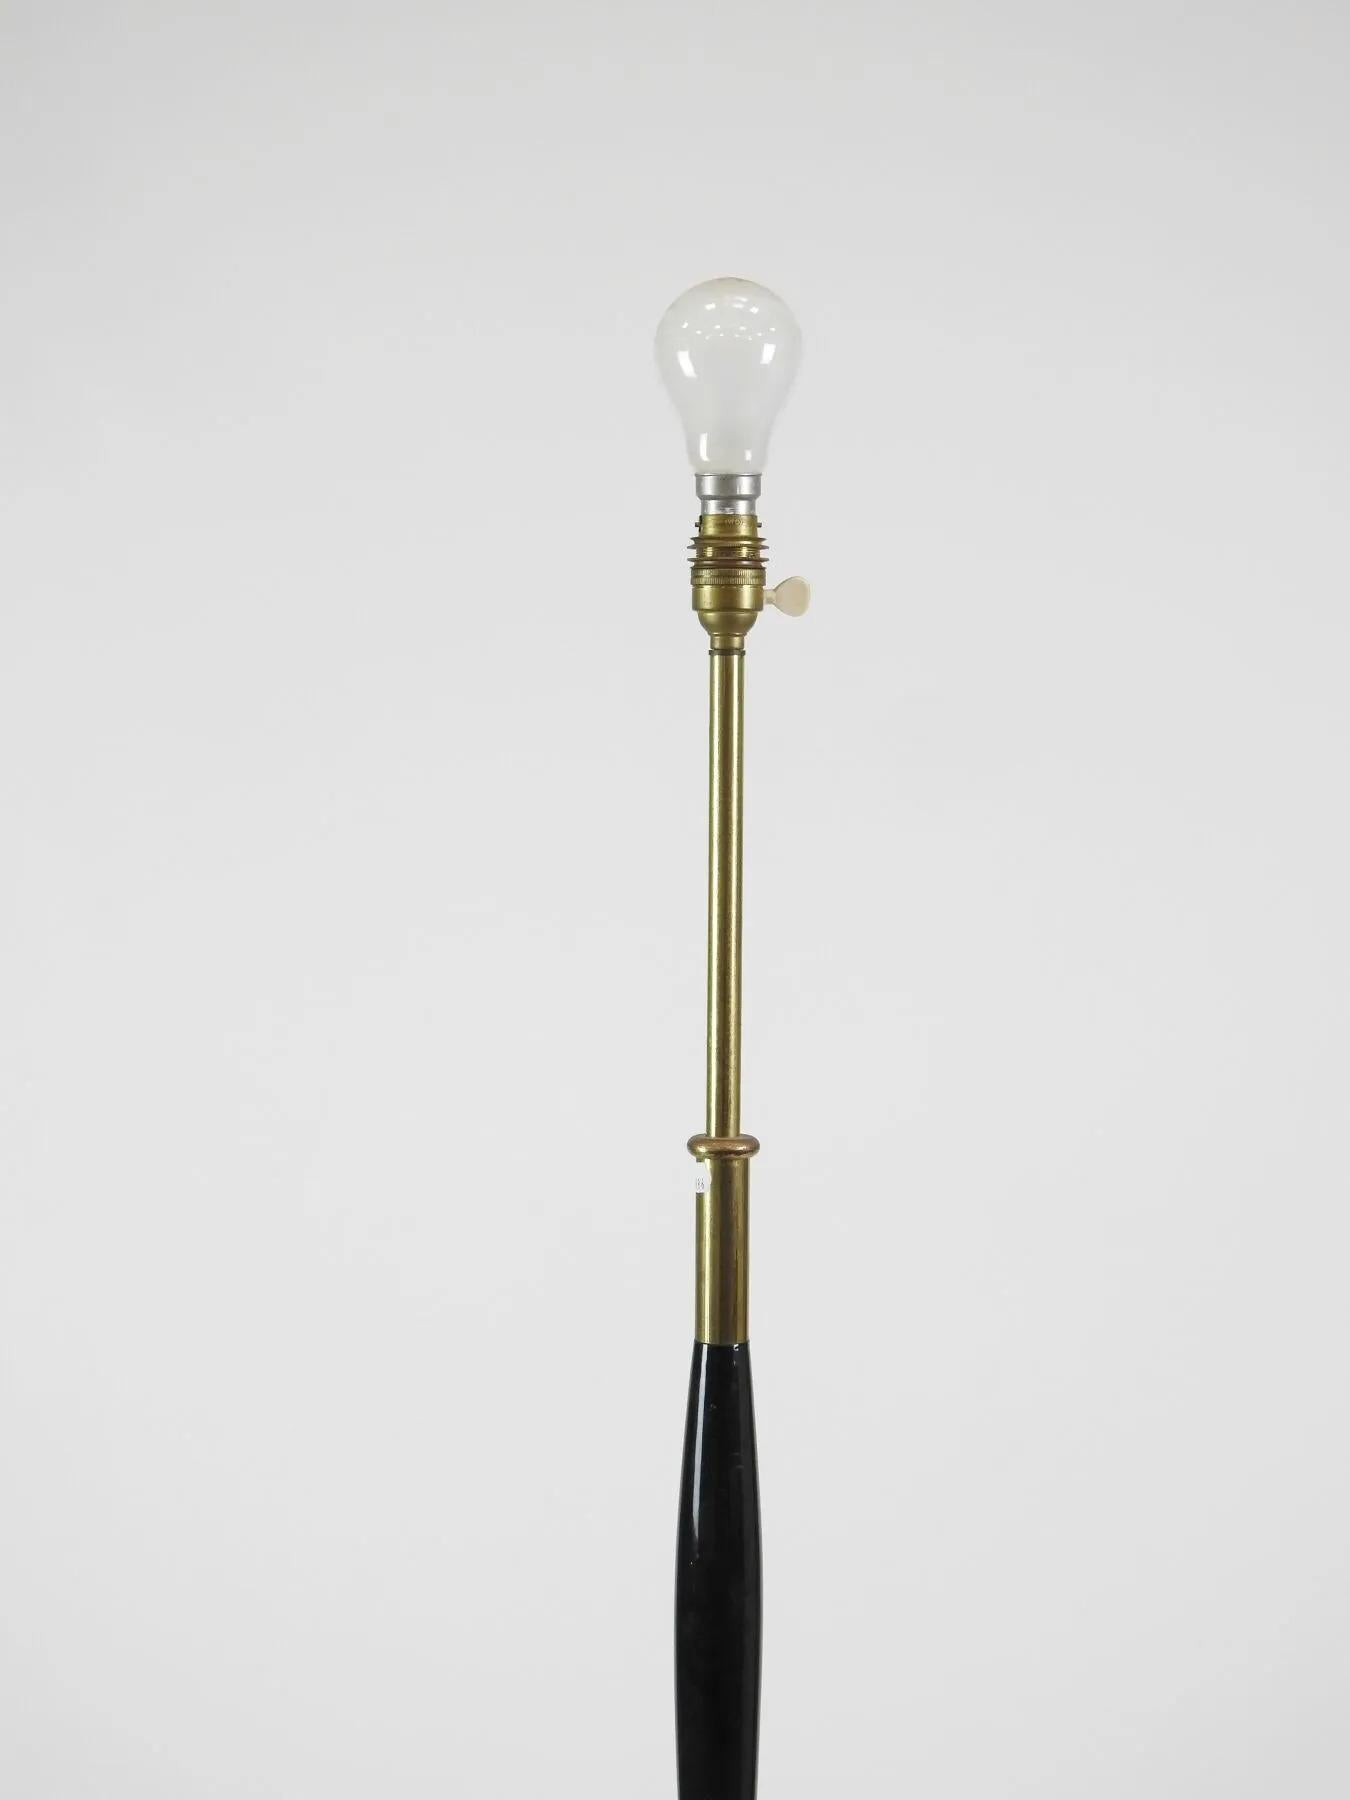 Arlus (attributed to) elegant floor lamp circa 1950 in lacquered wood, top in black opaline (marbrite)